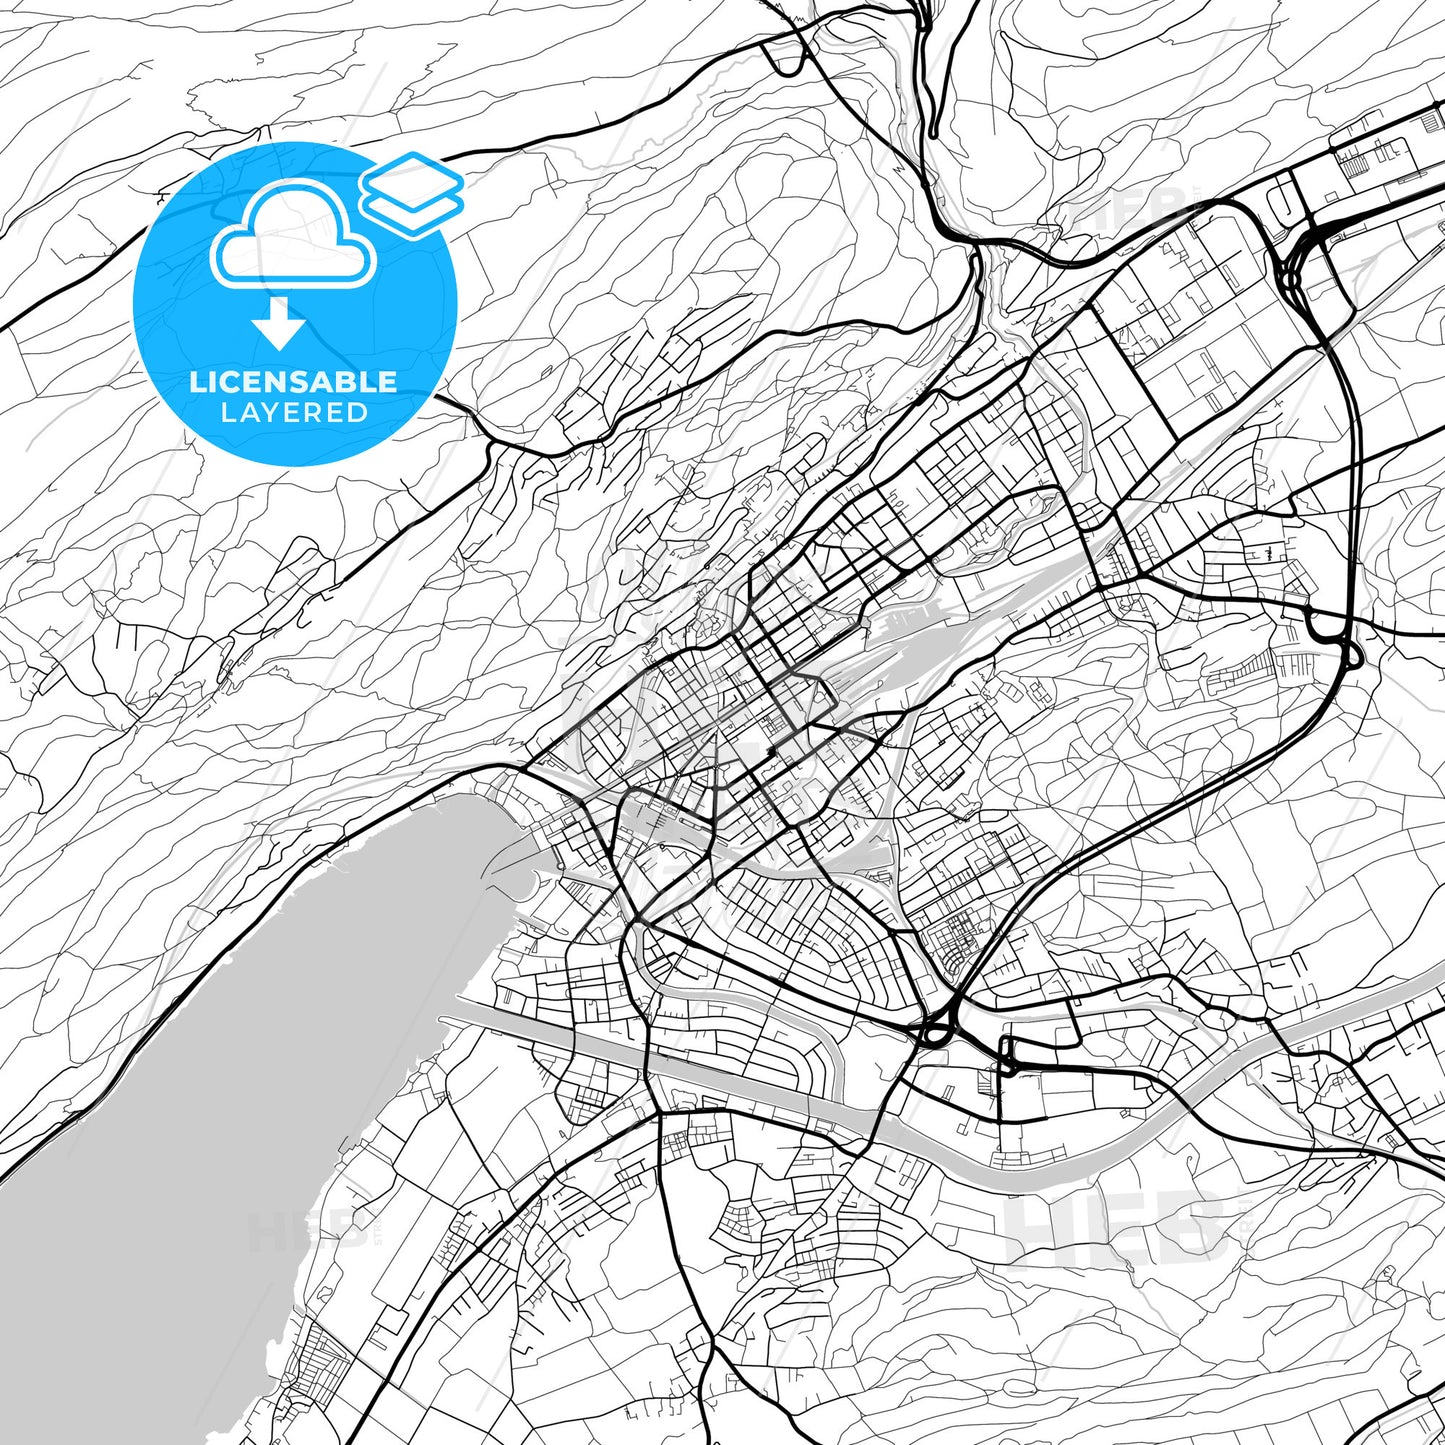 Layered PDF map of Biel/Bienne, Switzerland